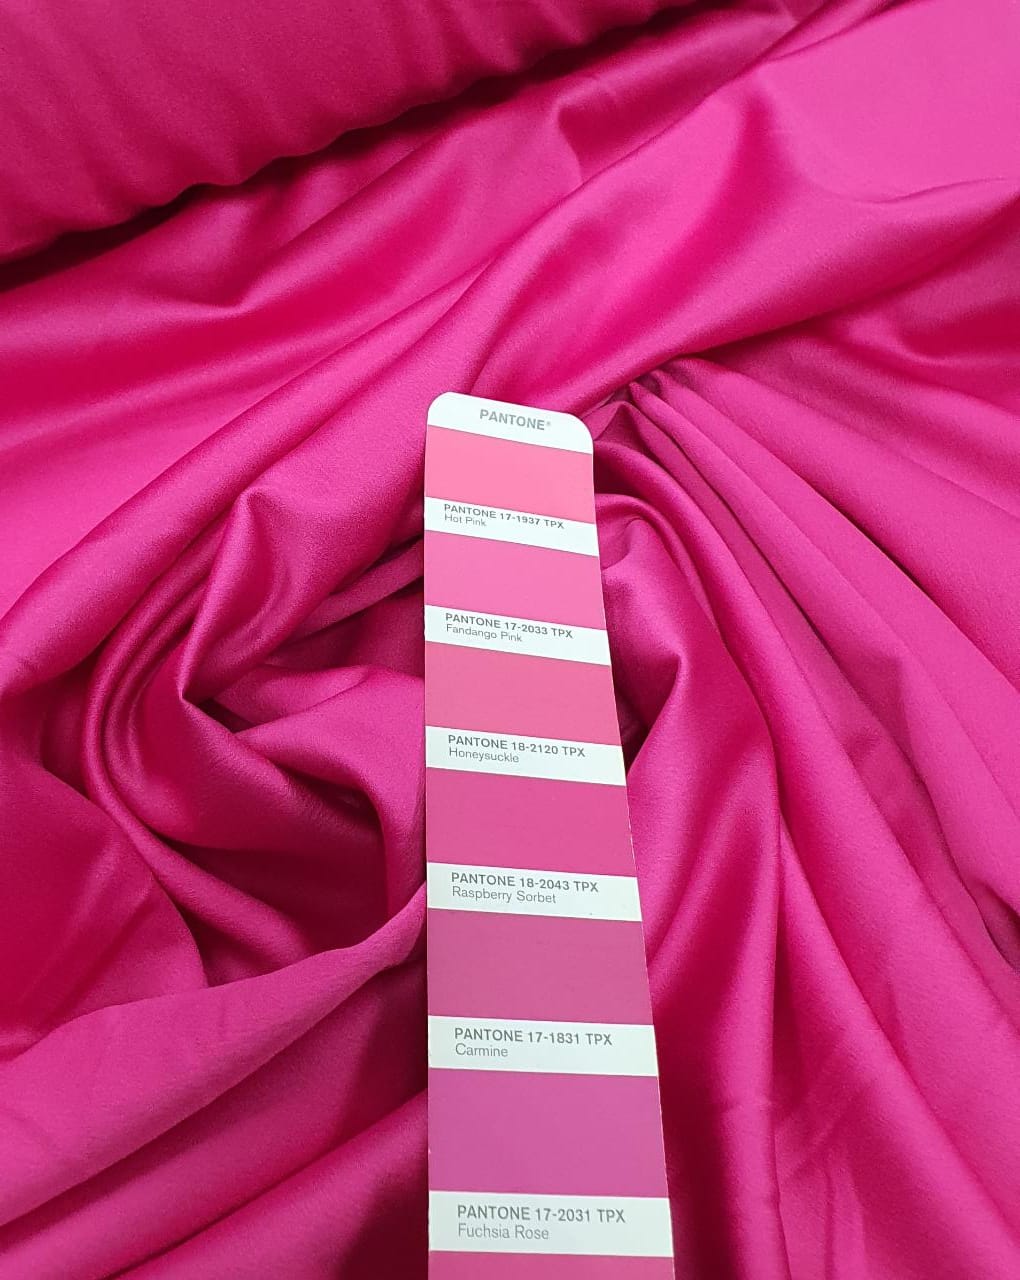 Crepe Amanda Liso Barbie Pink - Largura 1,50 m x Comprimento 2,65 m